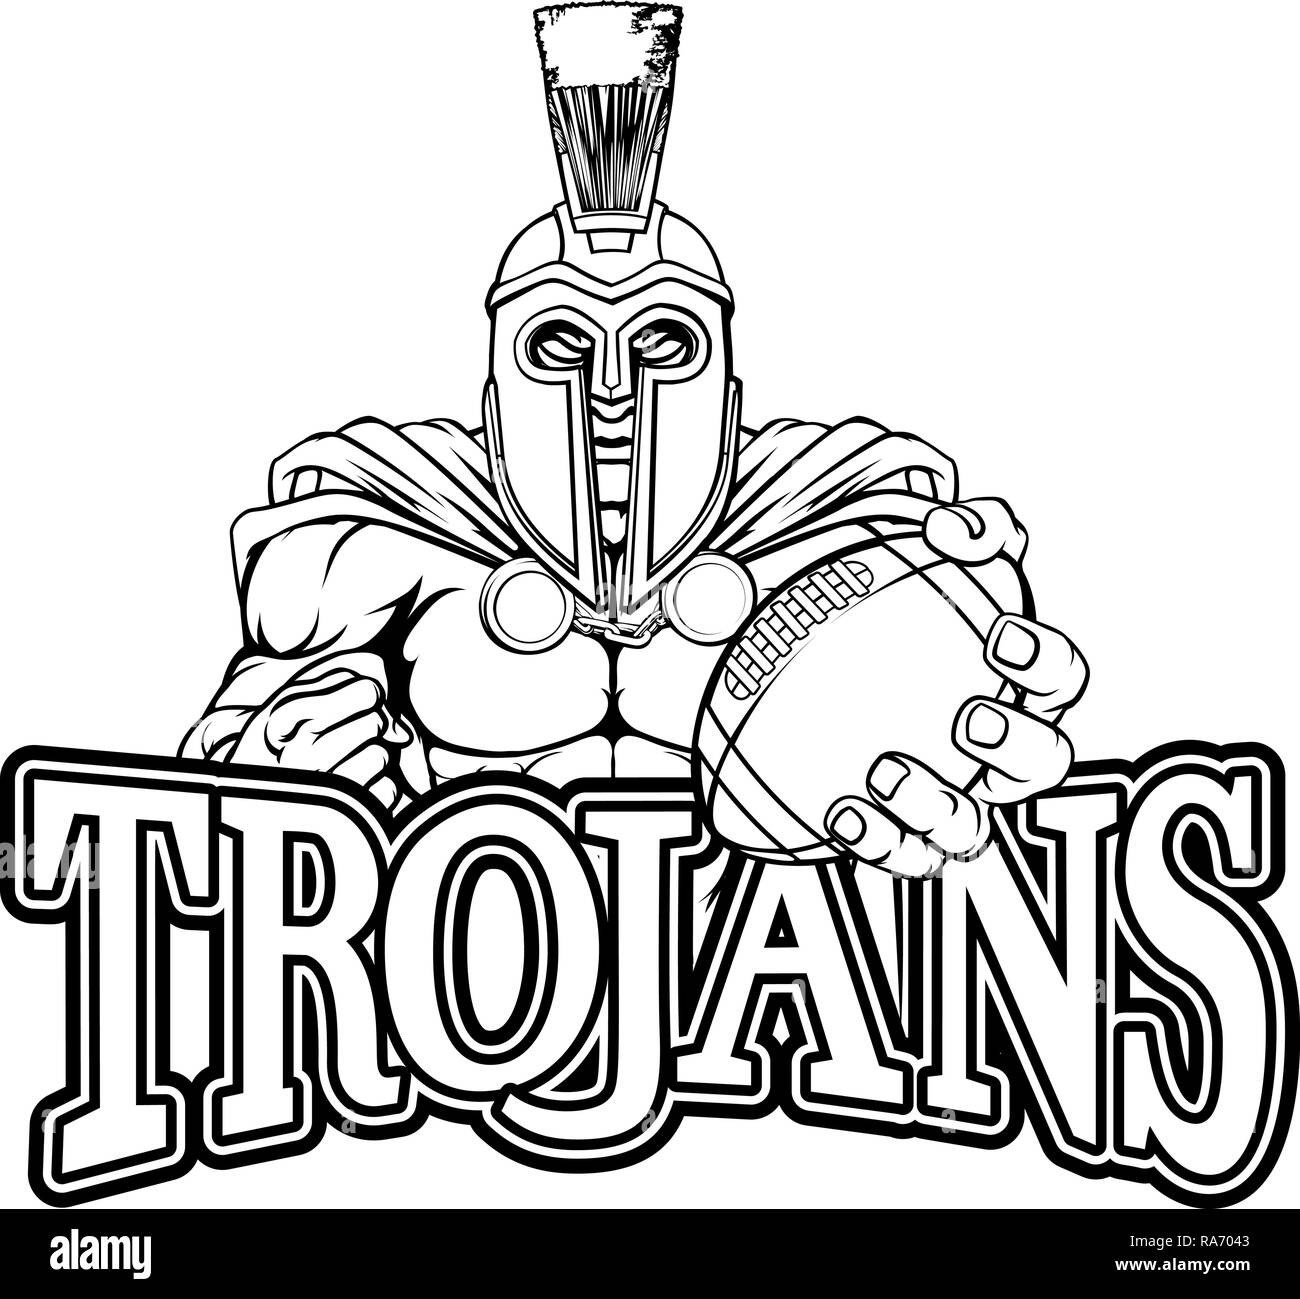 Trojan Spartan Sports Football Américain Mascot Illustration de Vecteur